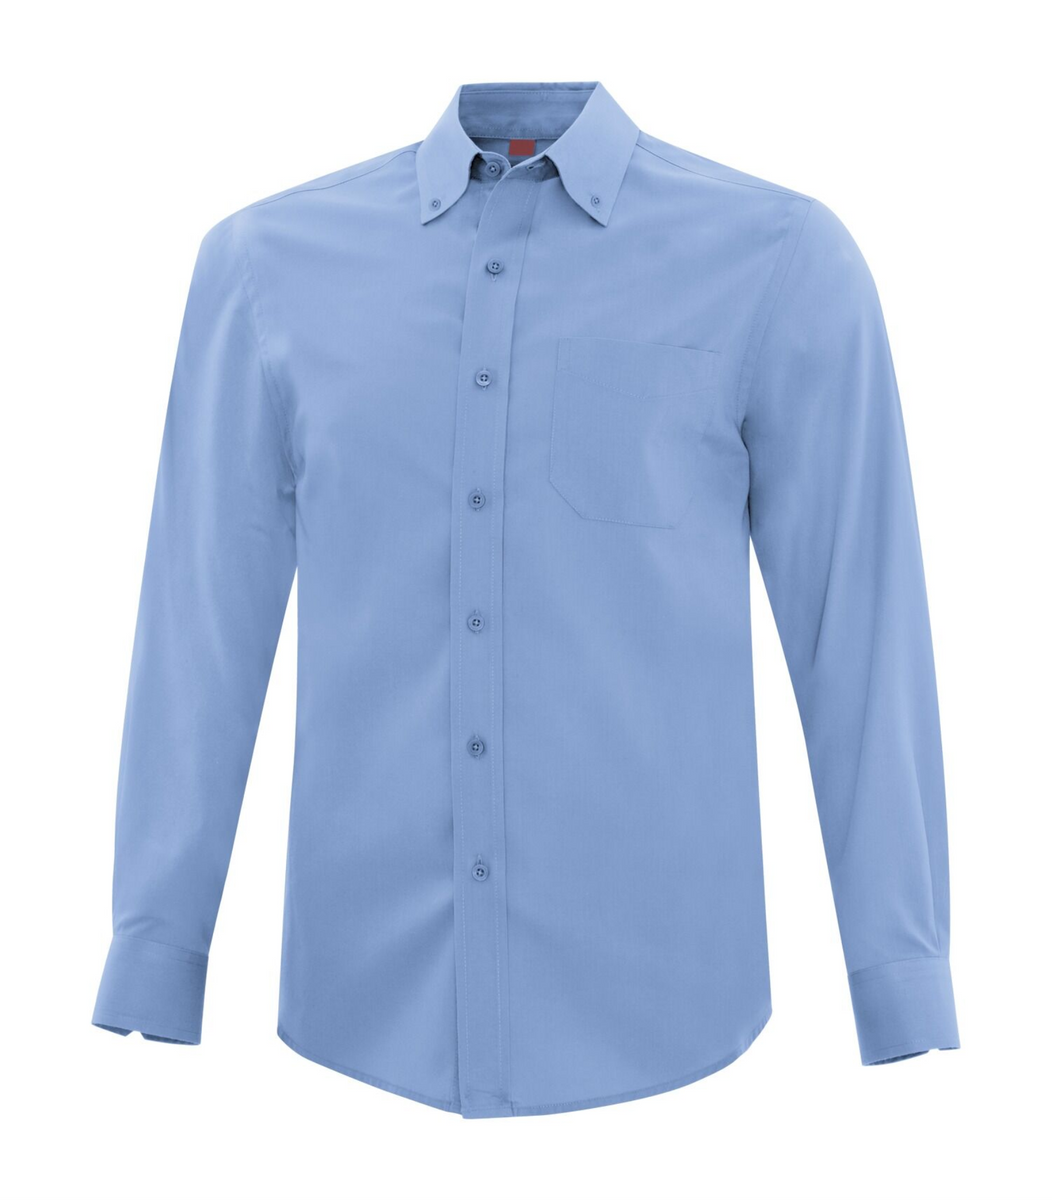 IROINNID Savings Long Sleeve Pullover Shirts for Men Comfy Turndown Half  Zipper Colorful Digital Printing Blouse,Dark Blue 